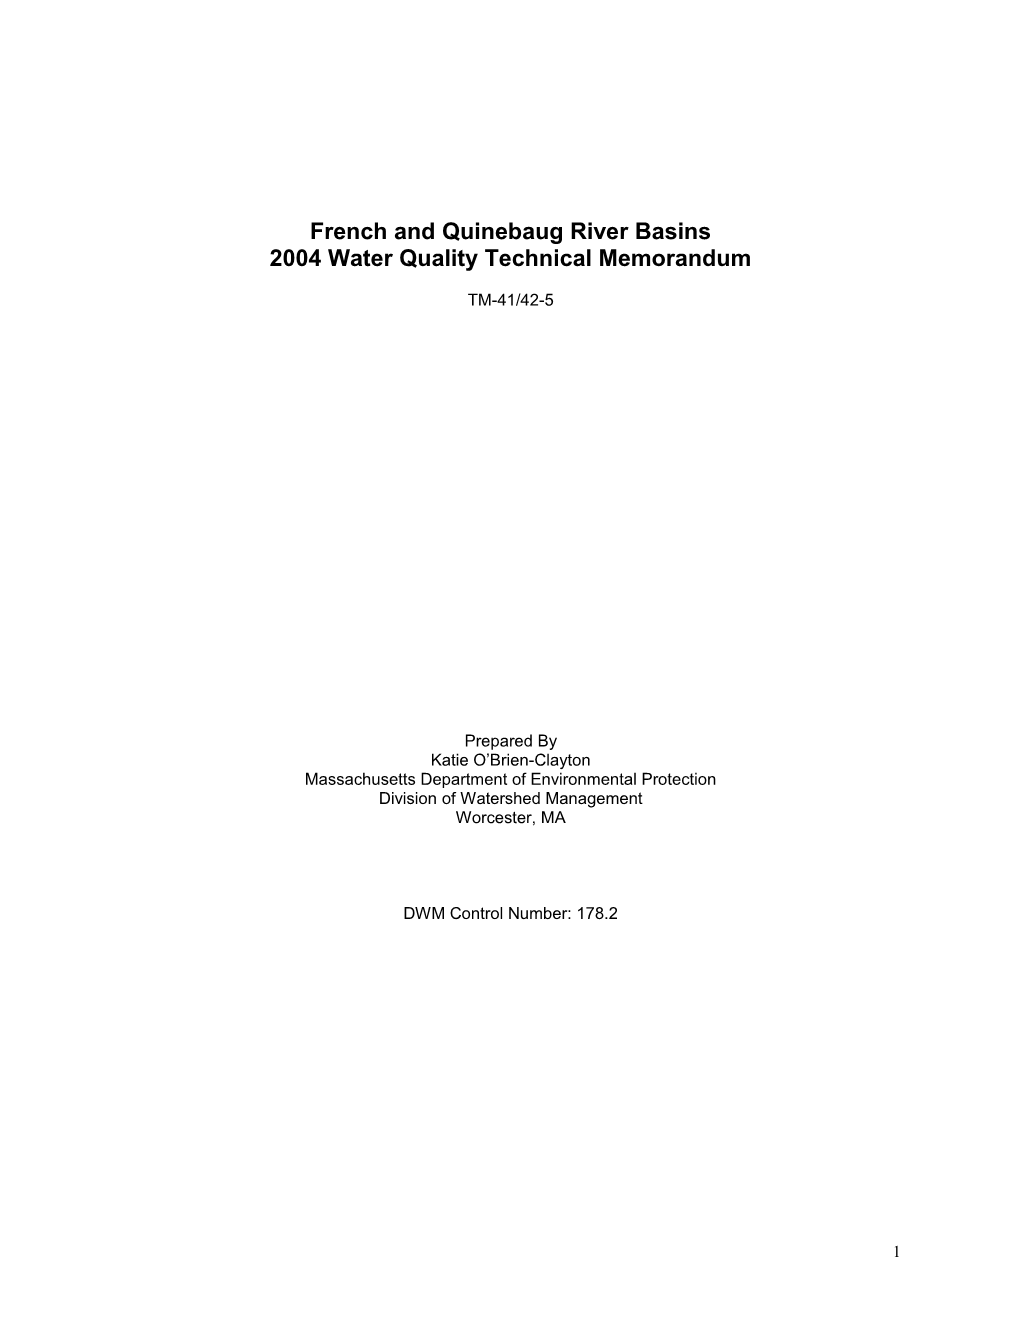 Hudson River Basin 2002 Water Quality Technical Memorandum